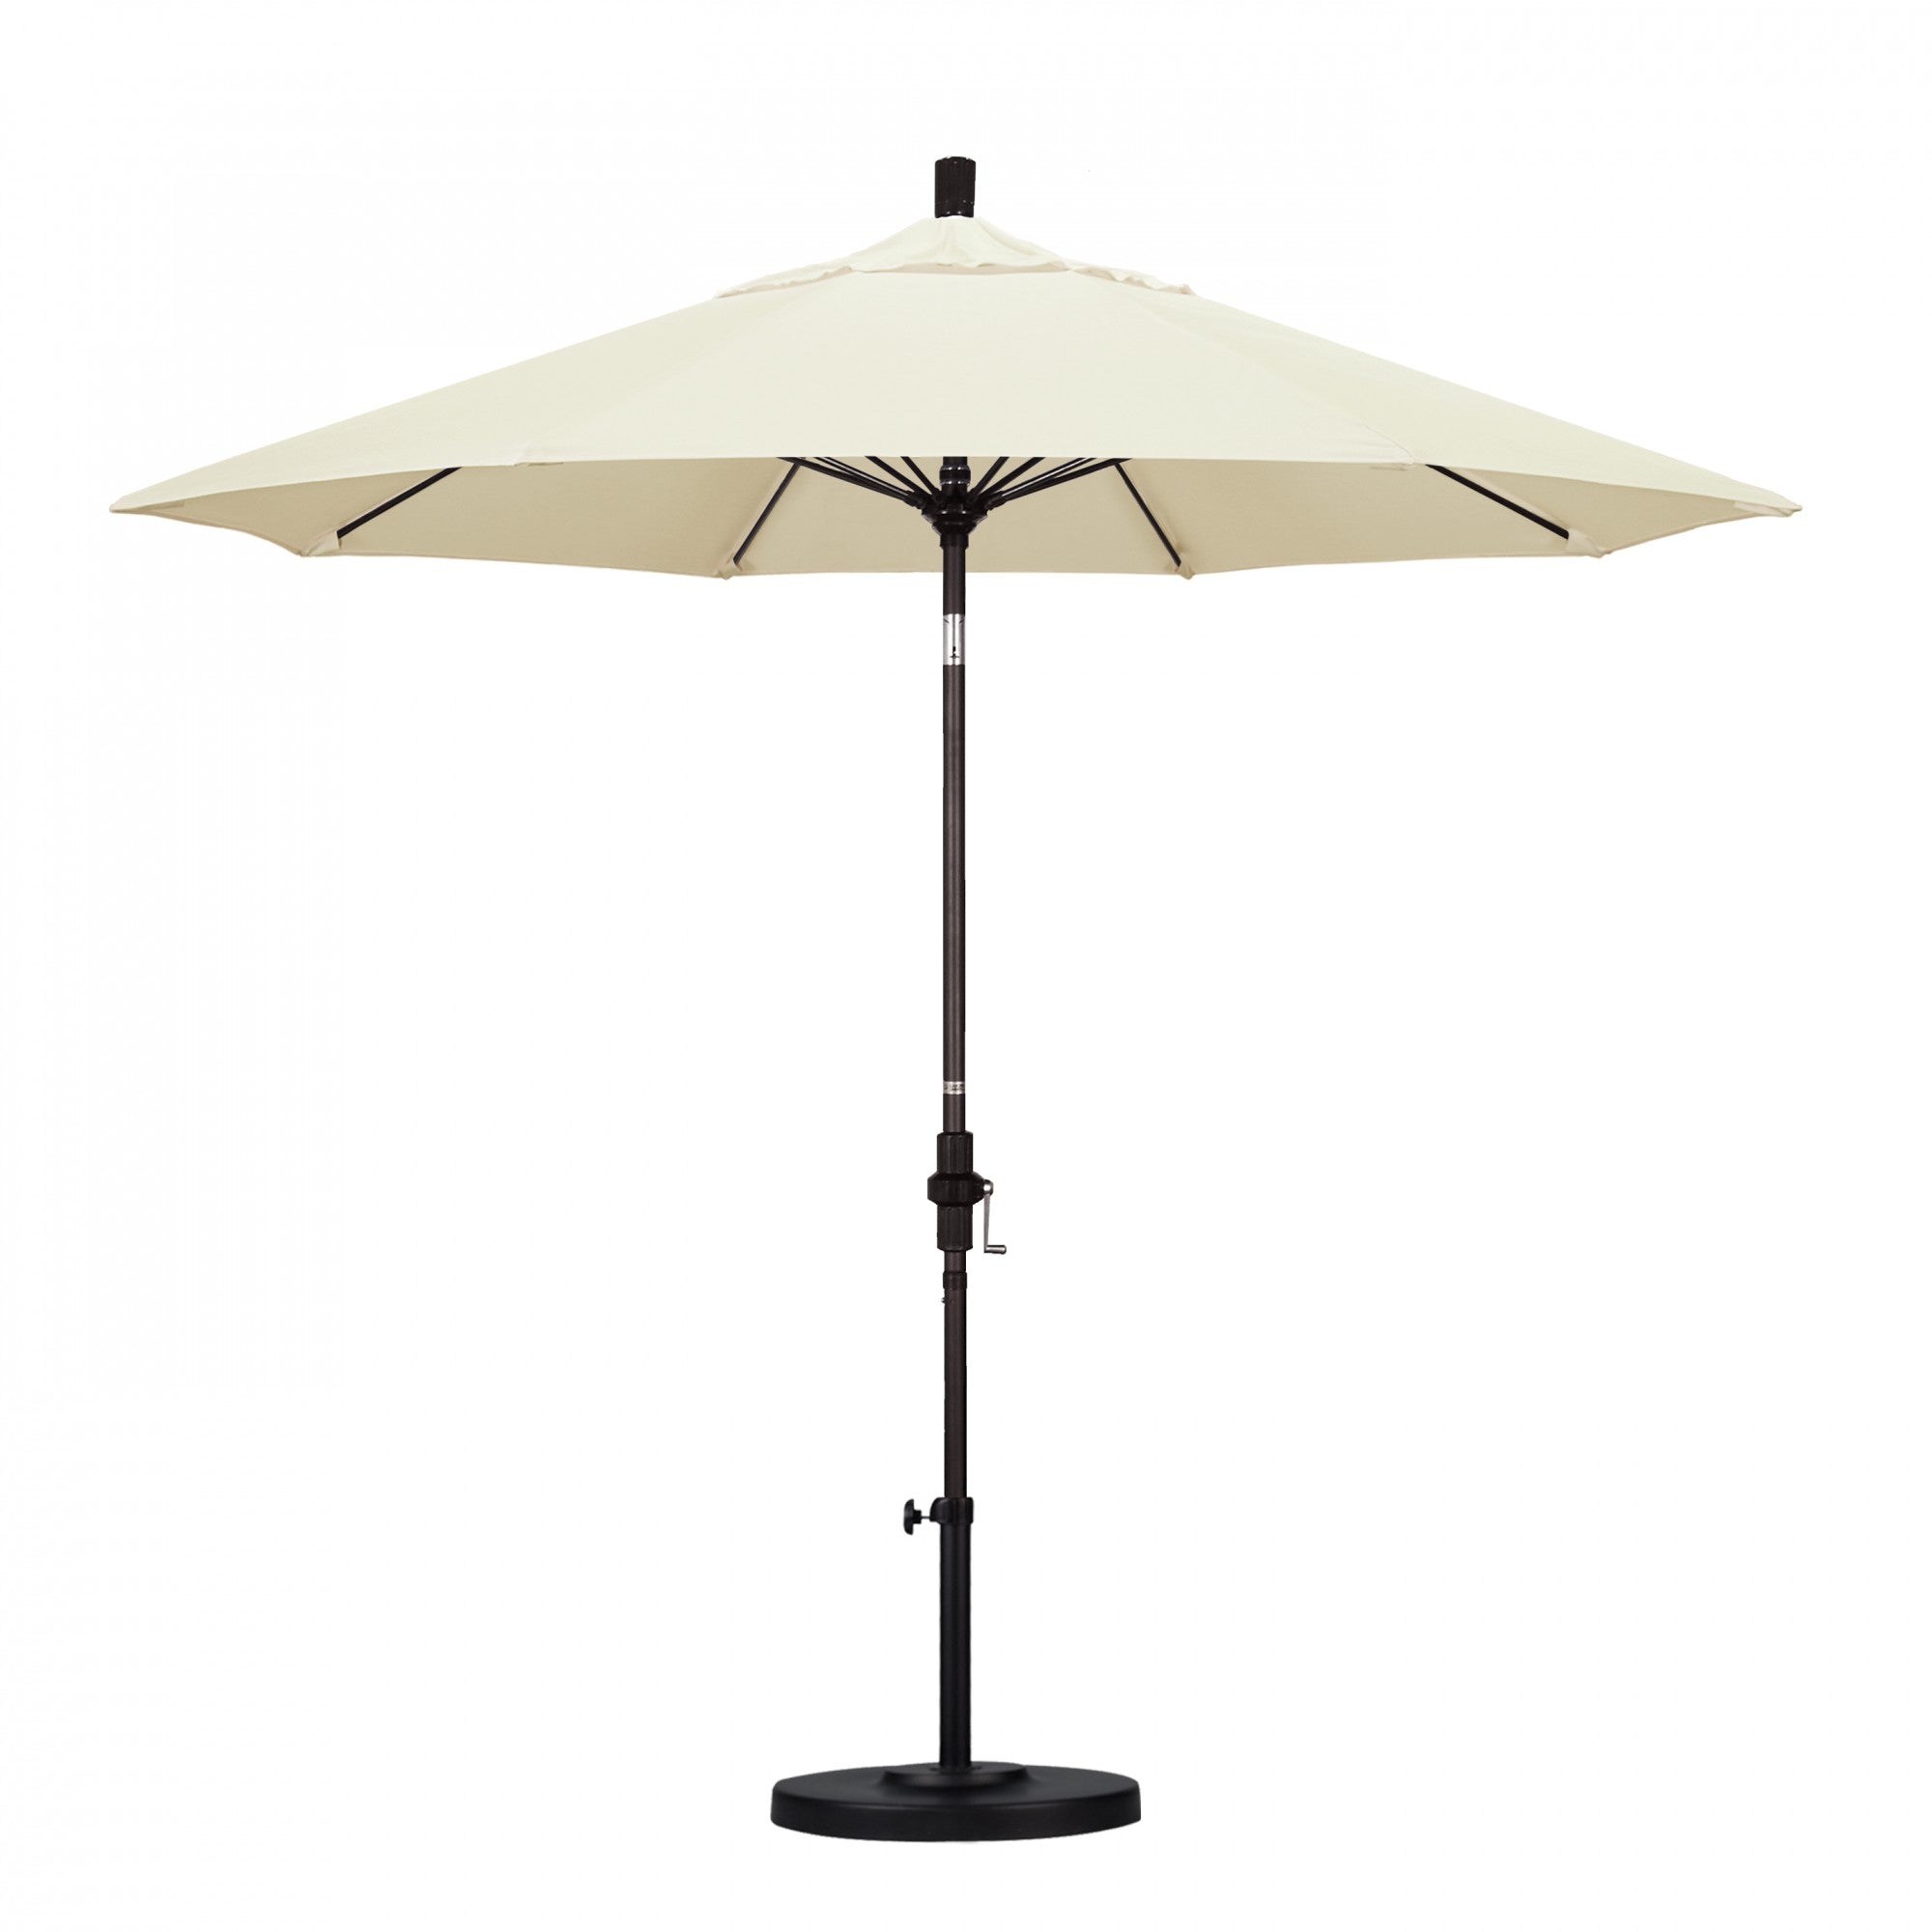 California Umbrella - 9' - Patio Umbrella Umbrella - Aluminum Pole - Canvas - Sunbrella  - GSCUF908117-5453